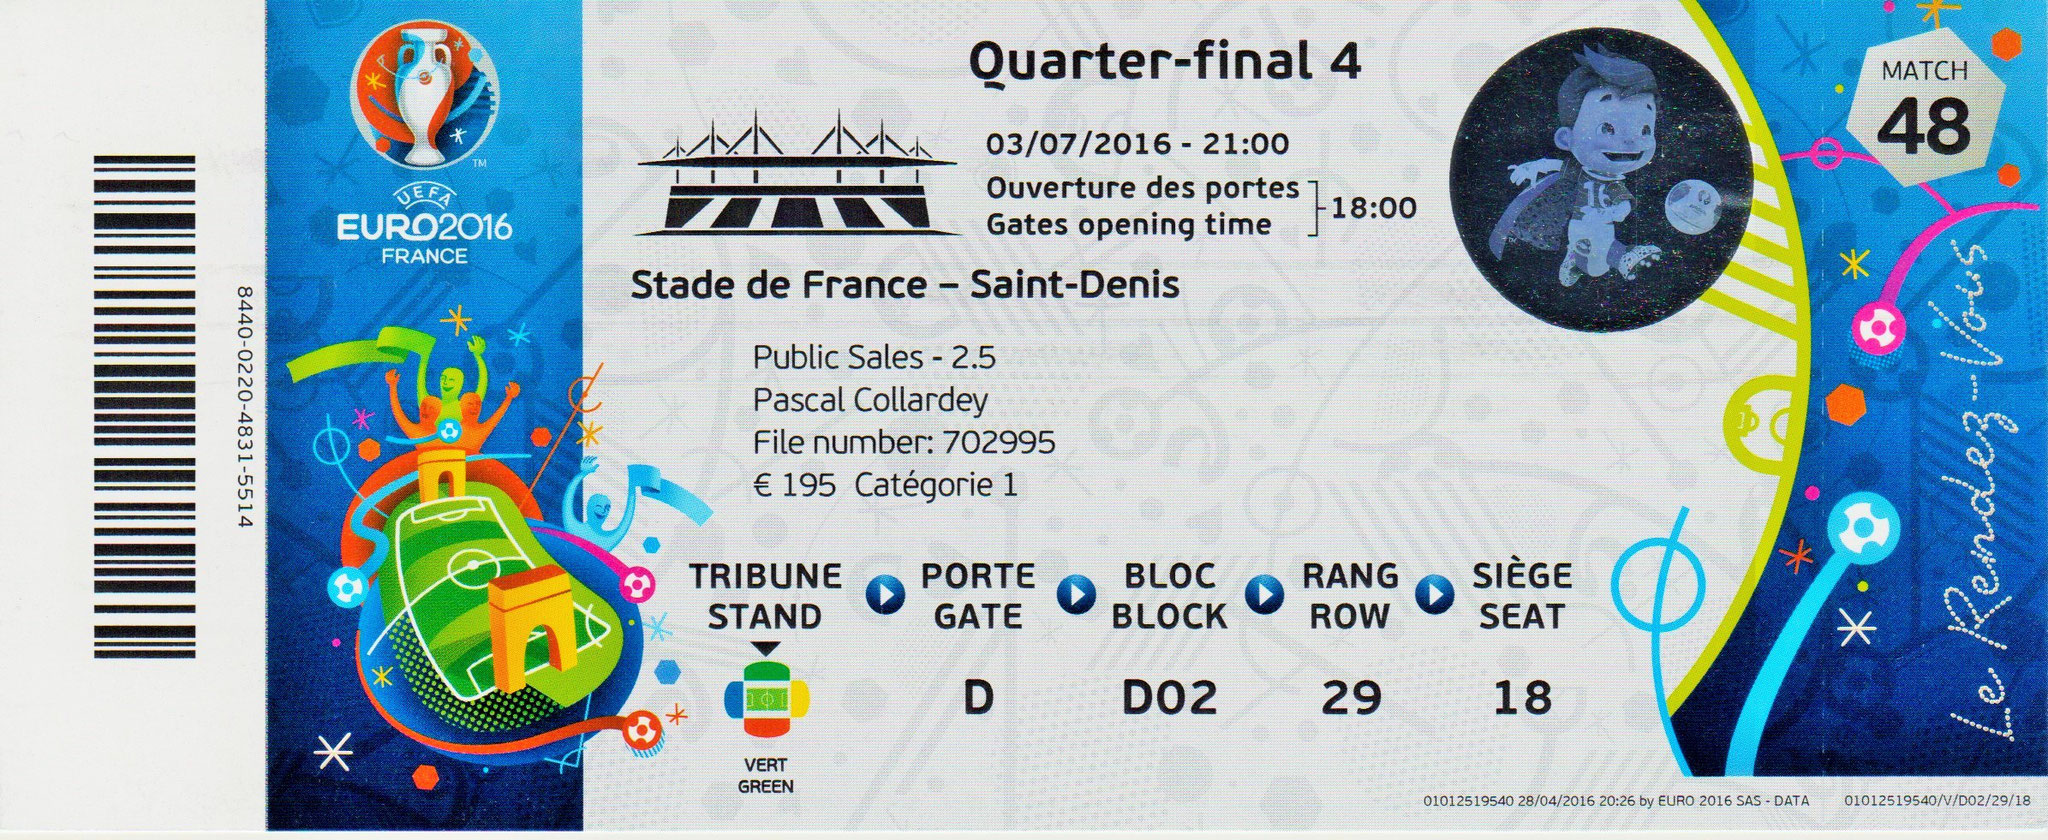 03/07/2016 St Denis :  1/4 Fin France  5 - 2  Islande  > Giroud x 2, Pogba, Payet, Griezmann  (Fra) -- Sigthórsson, B. Bjarnason  (Isl)  < 